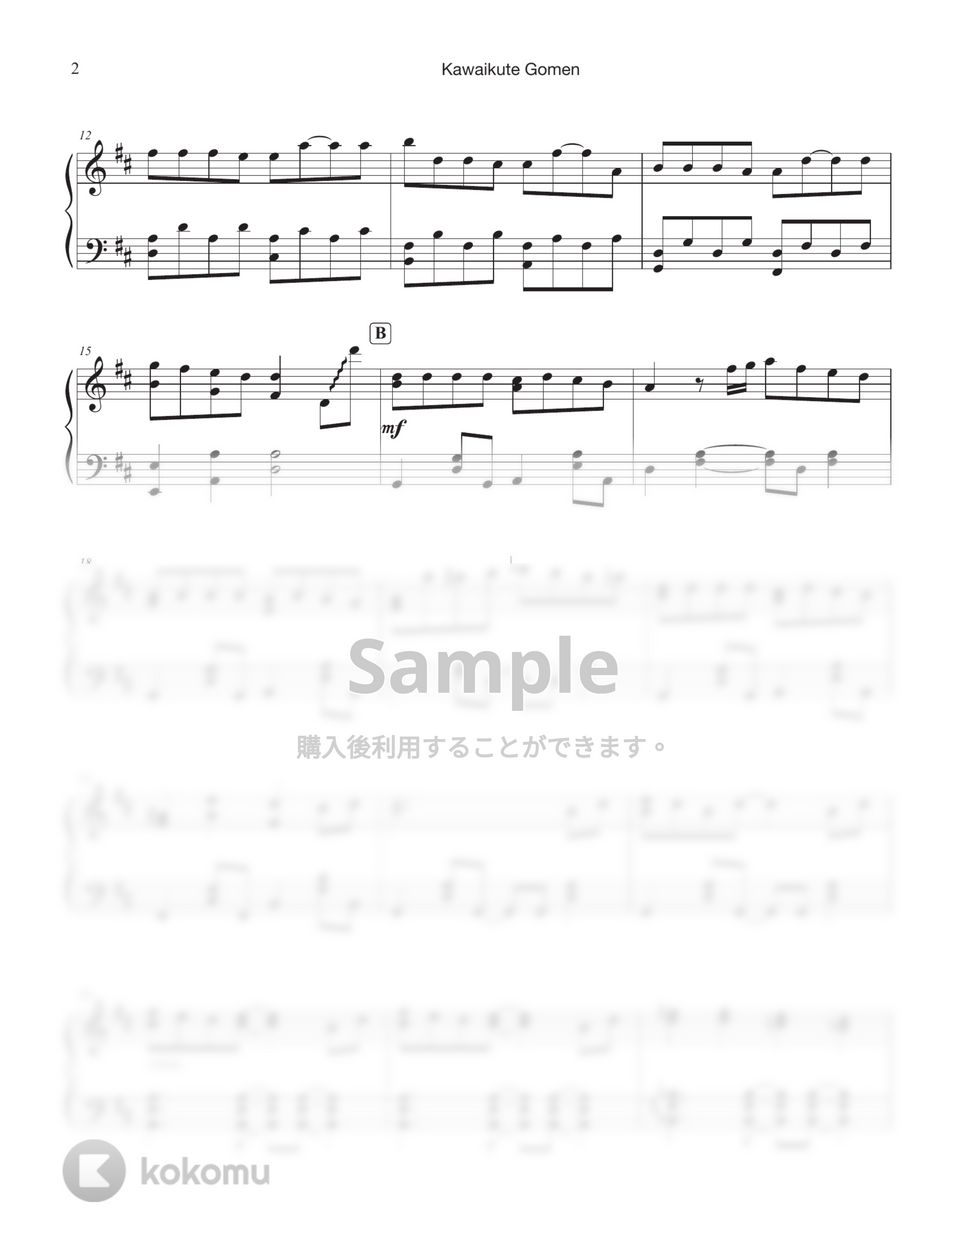 HoneyWorks - 可愛くてごめん - かぴ (Short ver.) by Tully Piano